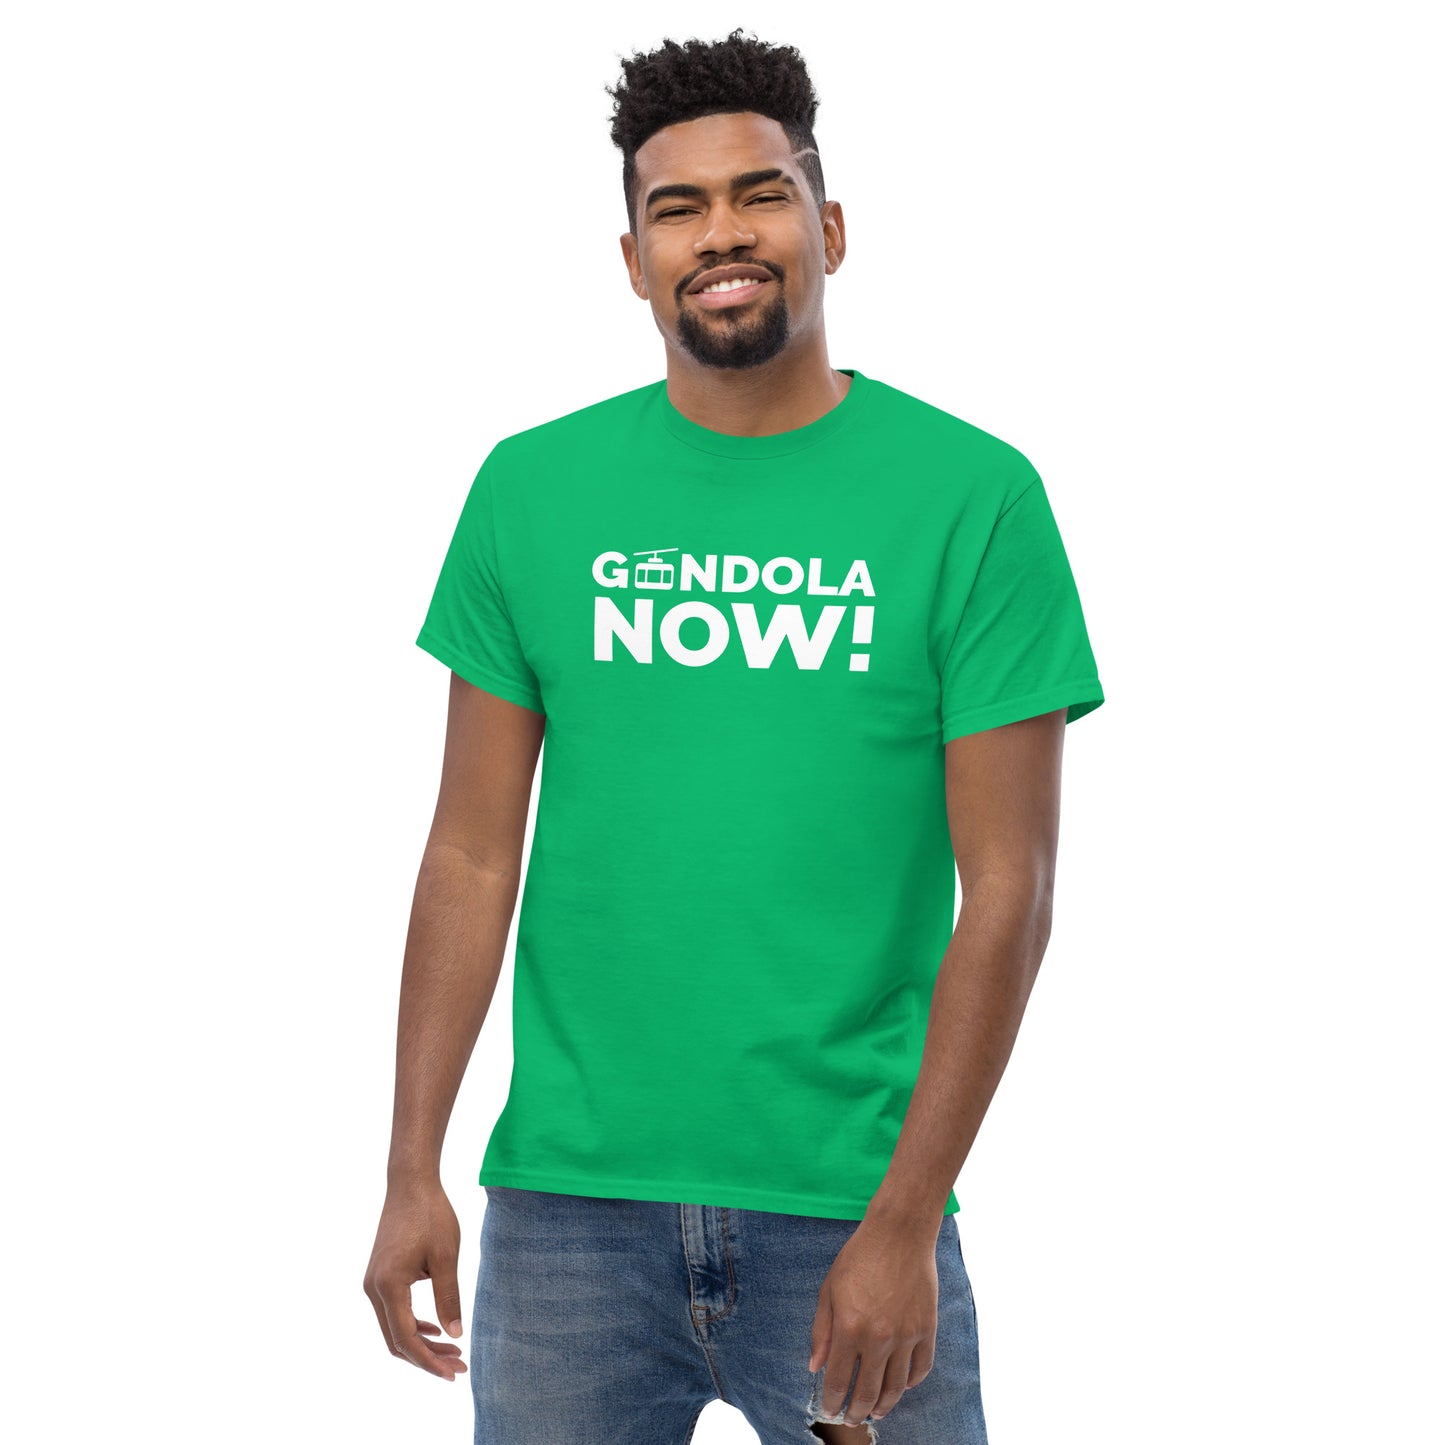 Gondola Now t-shirt